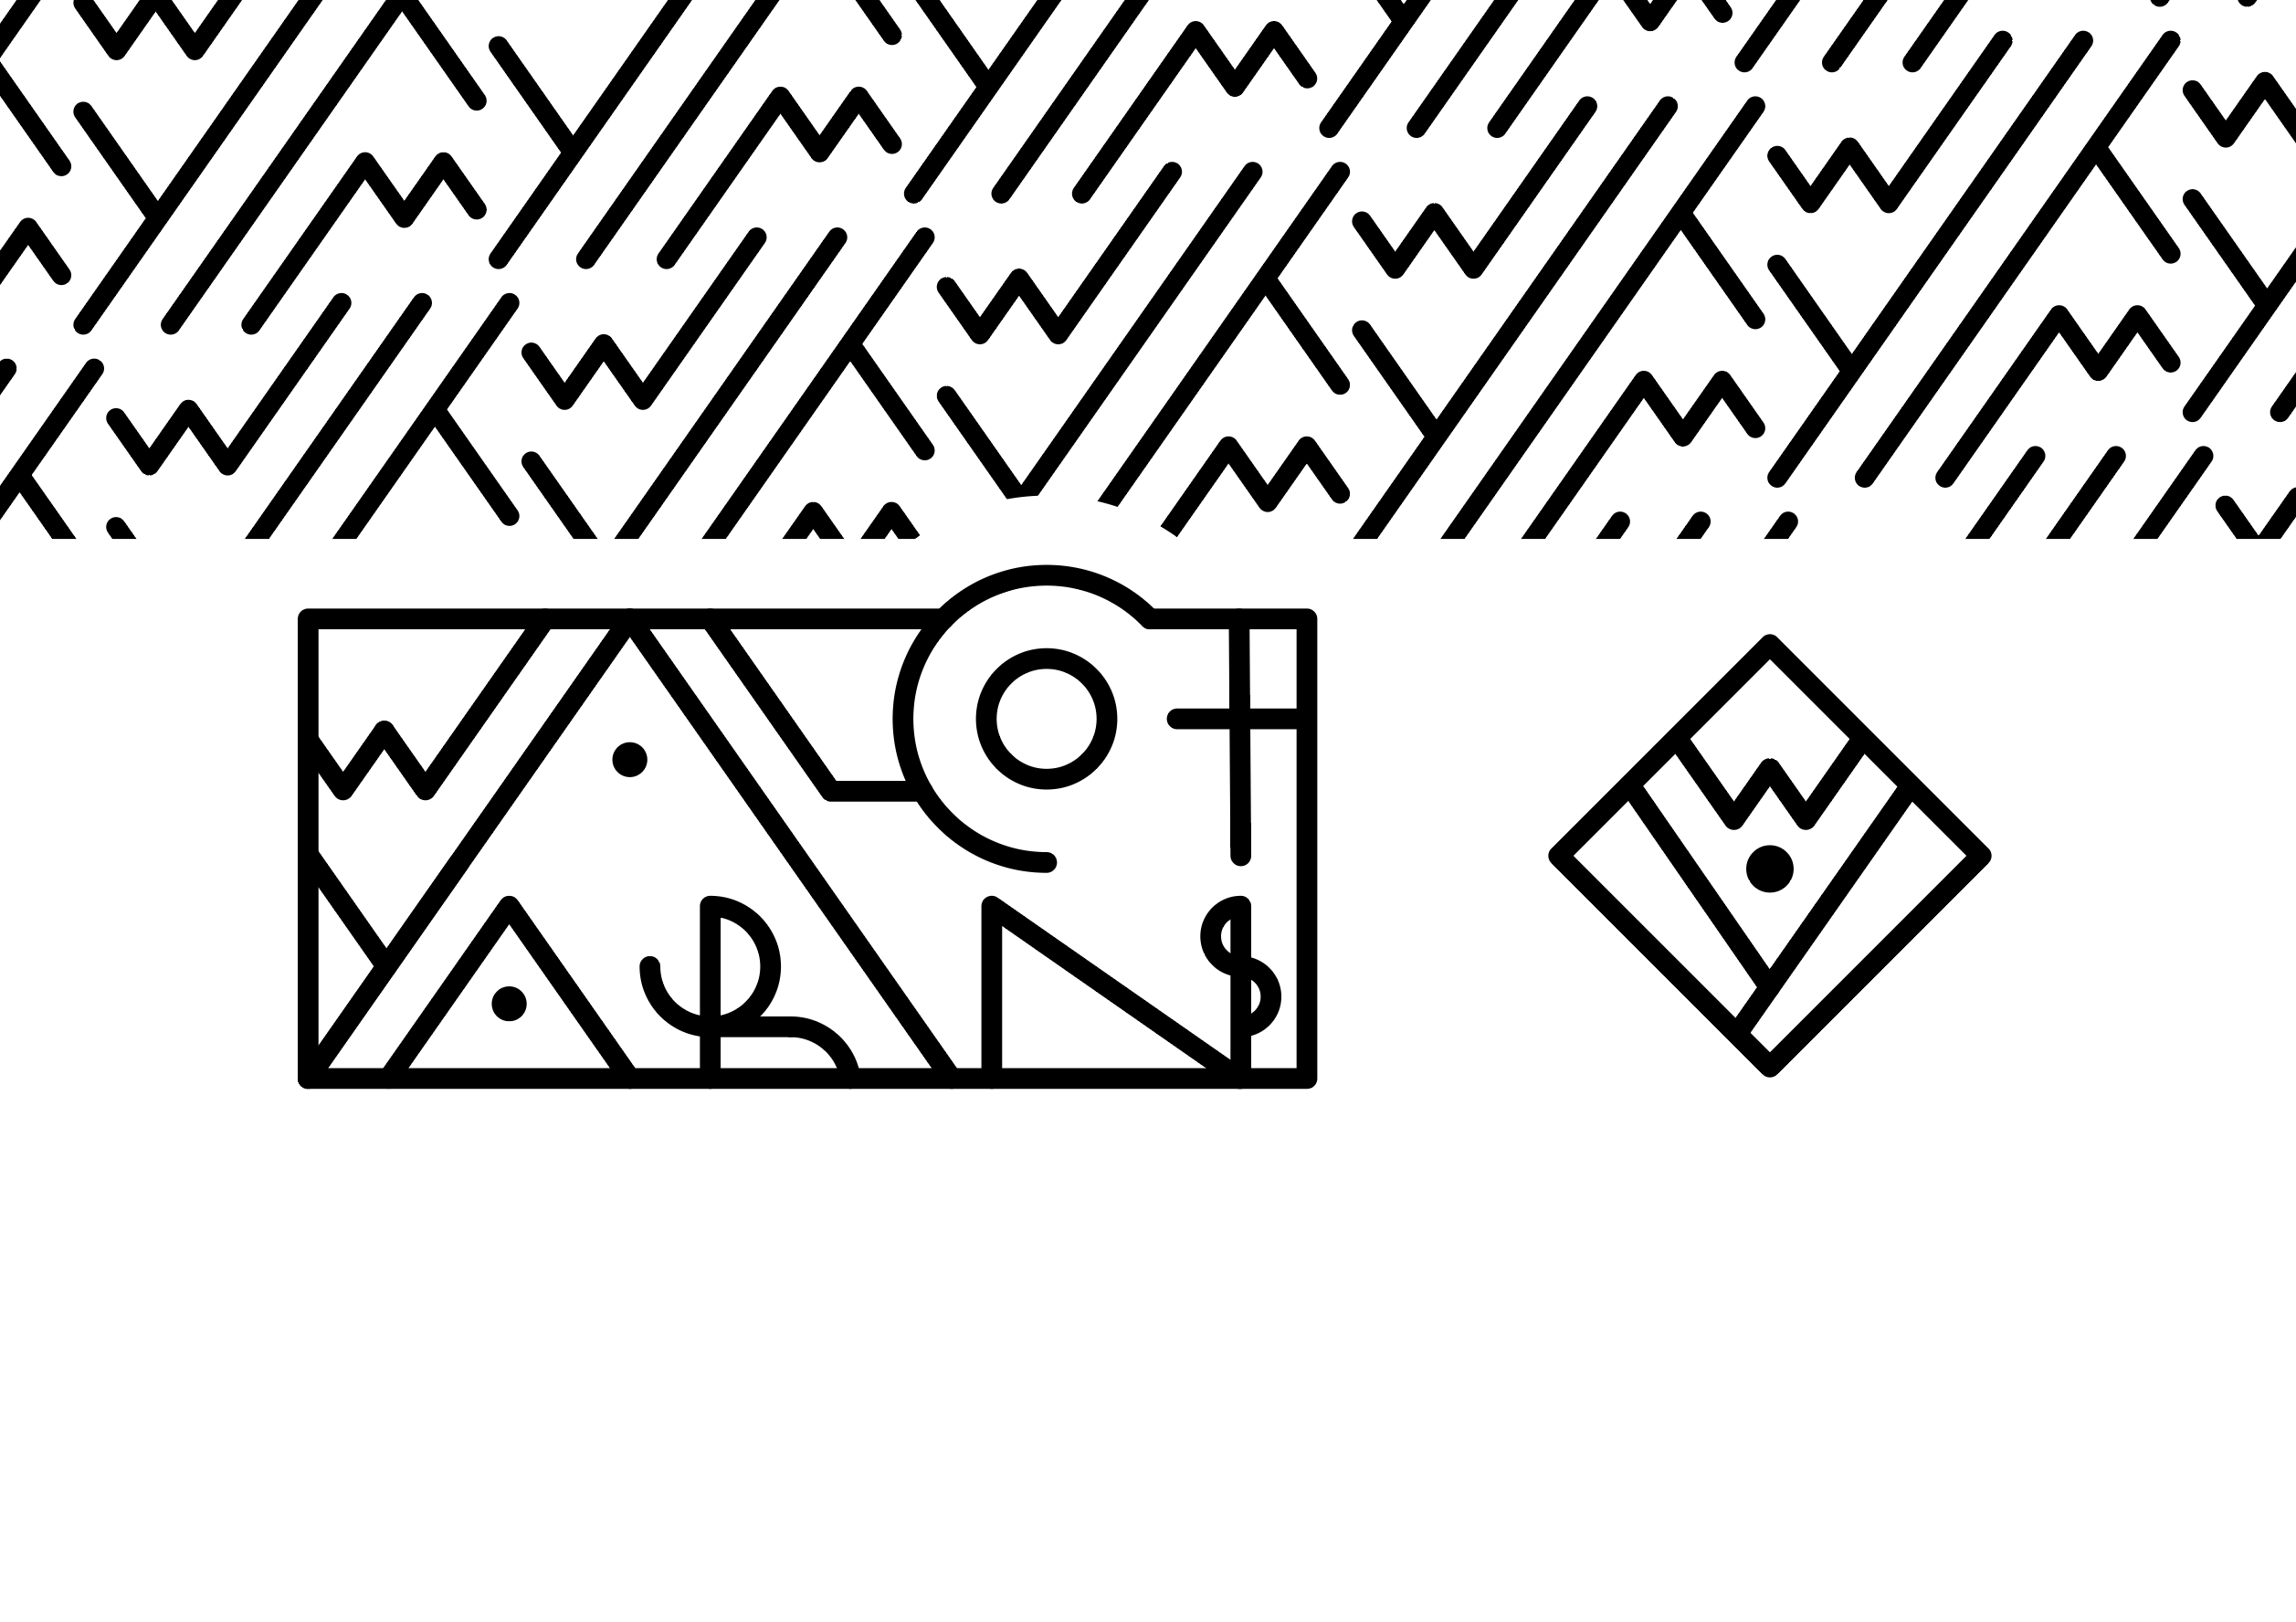 Walcot Yarns logo, black abstract geometric text and monogram motif